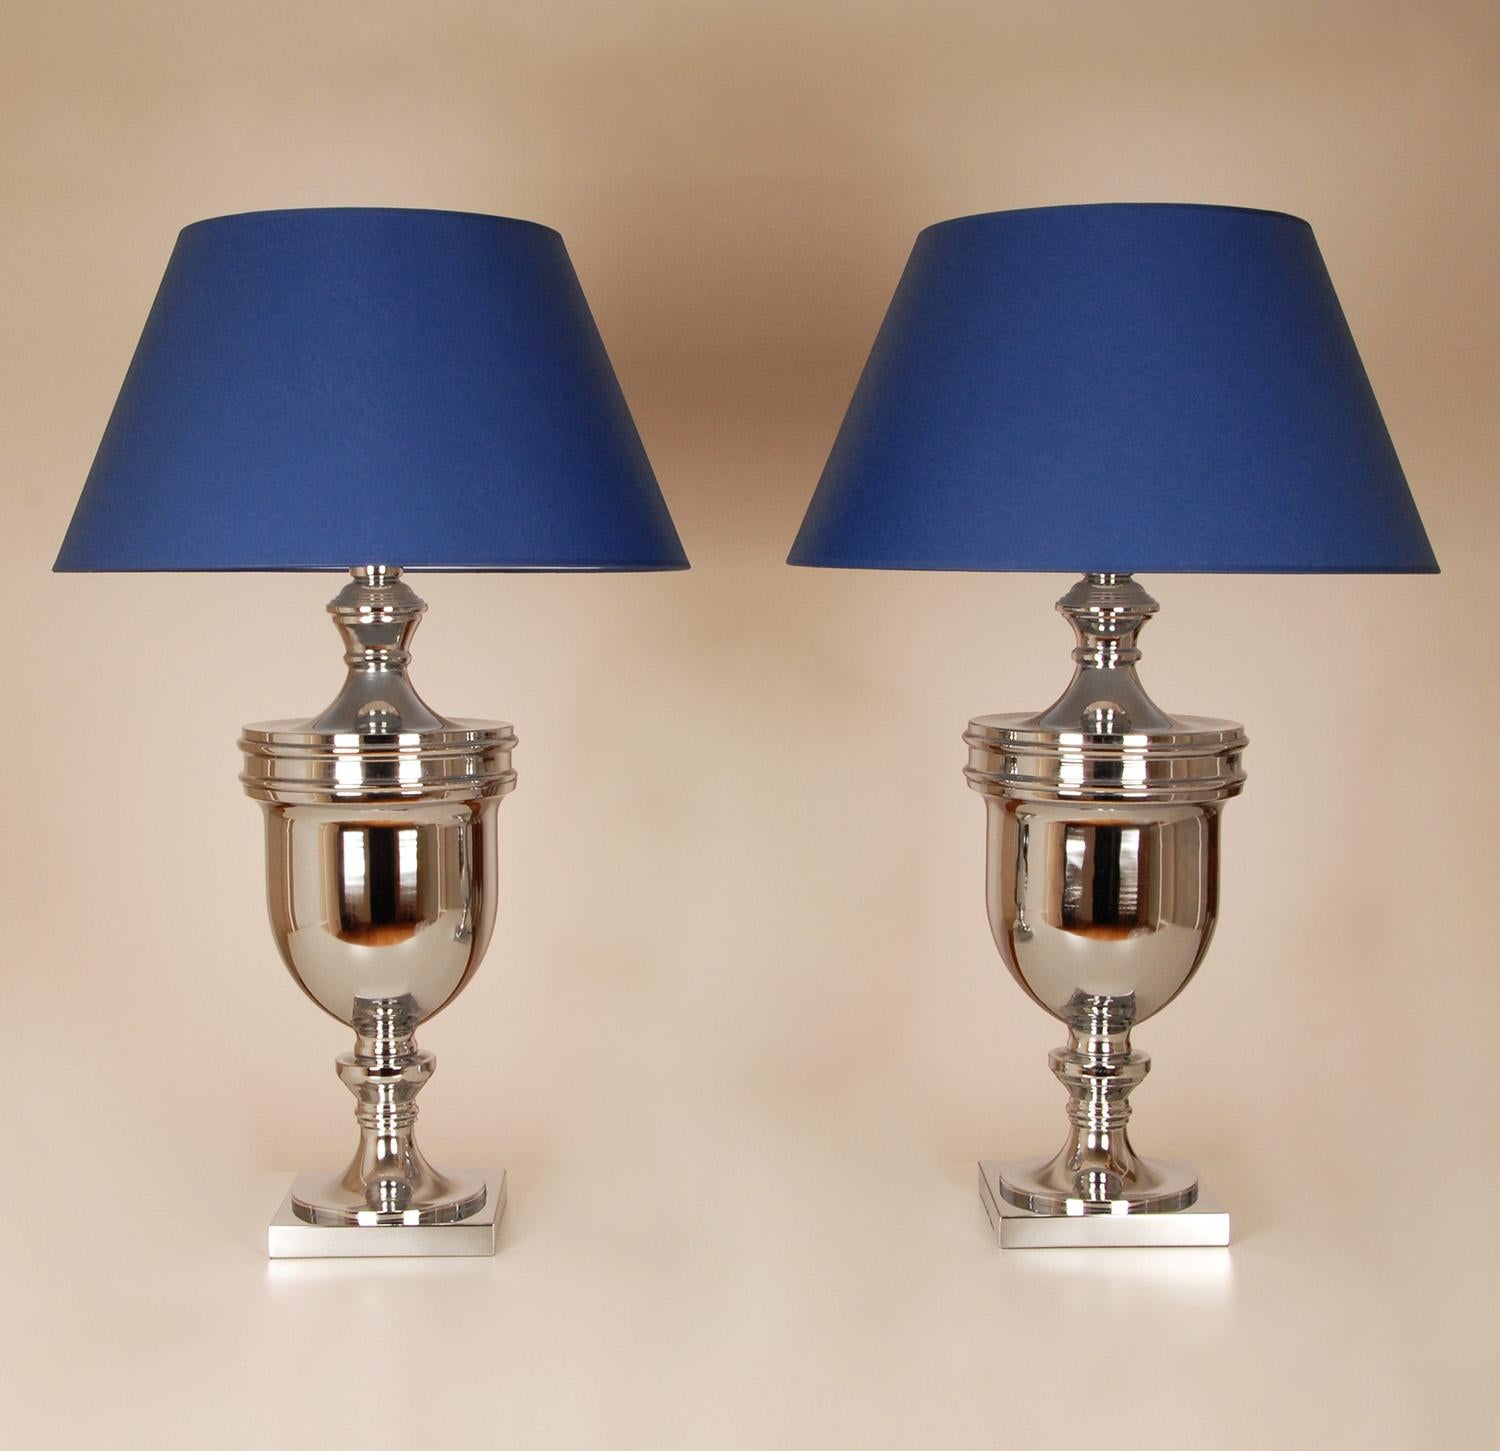 Tischlampen, Chrom, Silber, Königsblau, Moderne, hohe Tischlampen, Paar 2